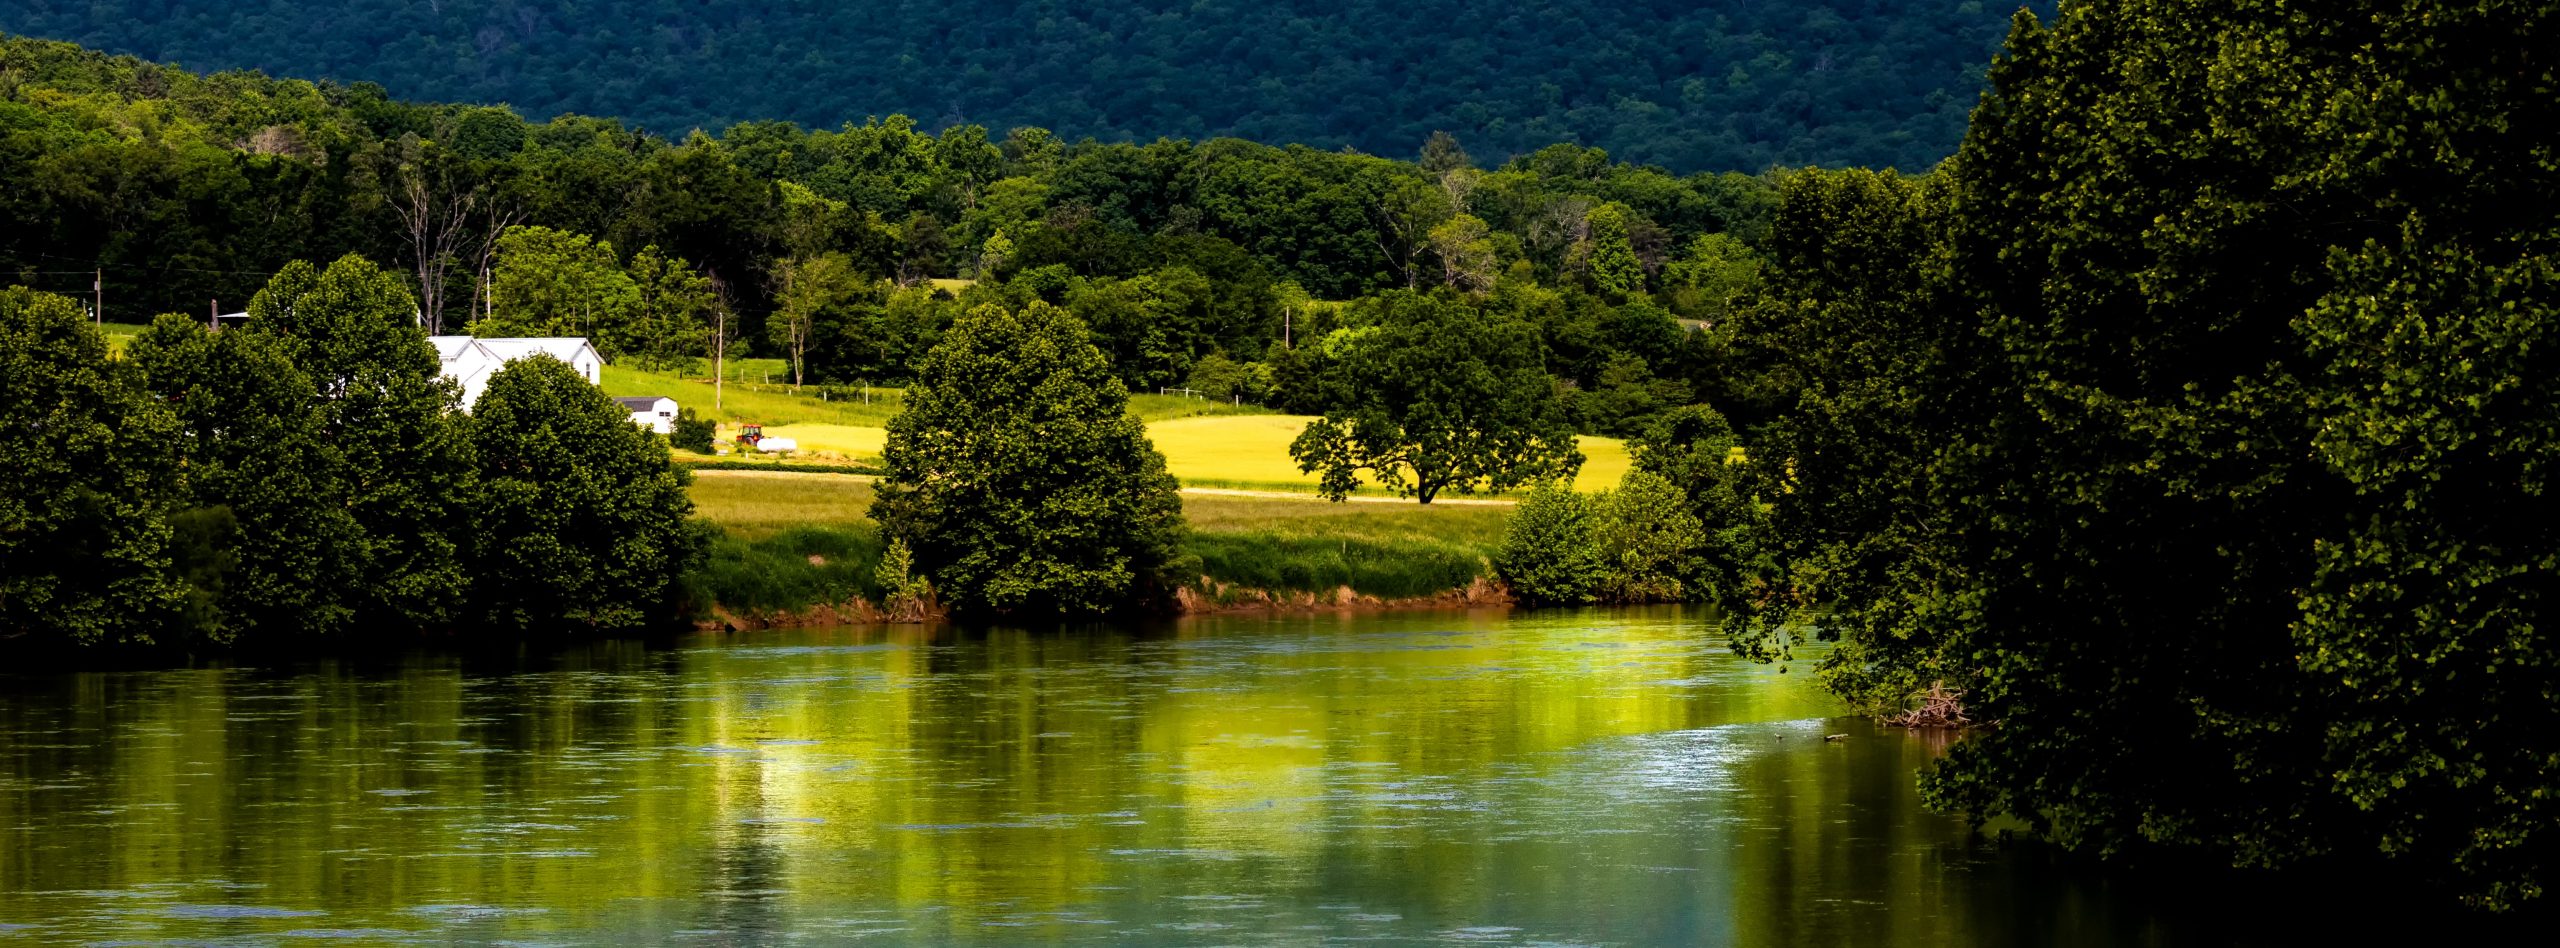 peaceful shot of the Shenandoah River